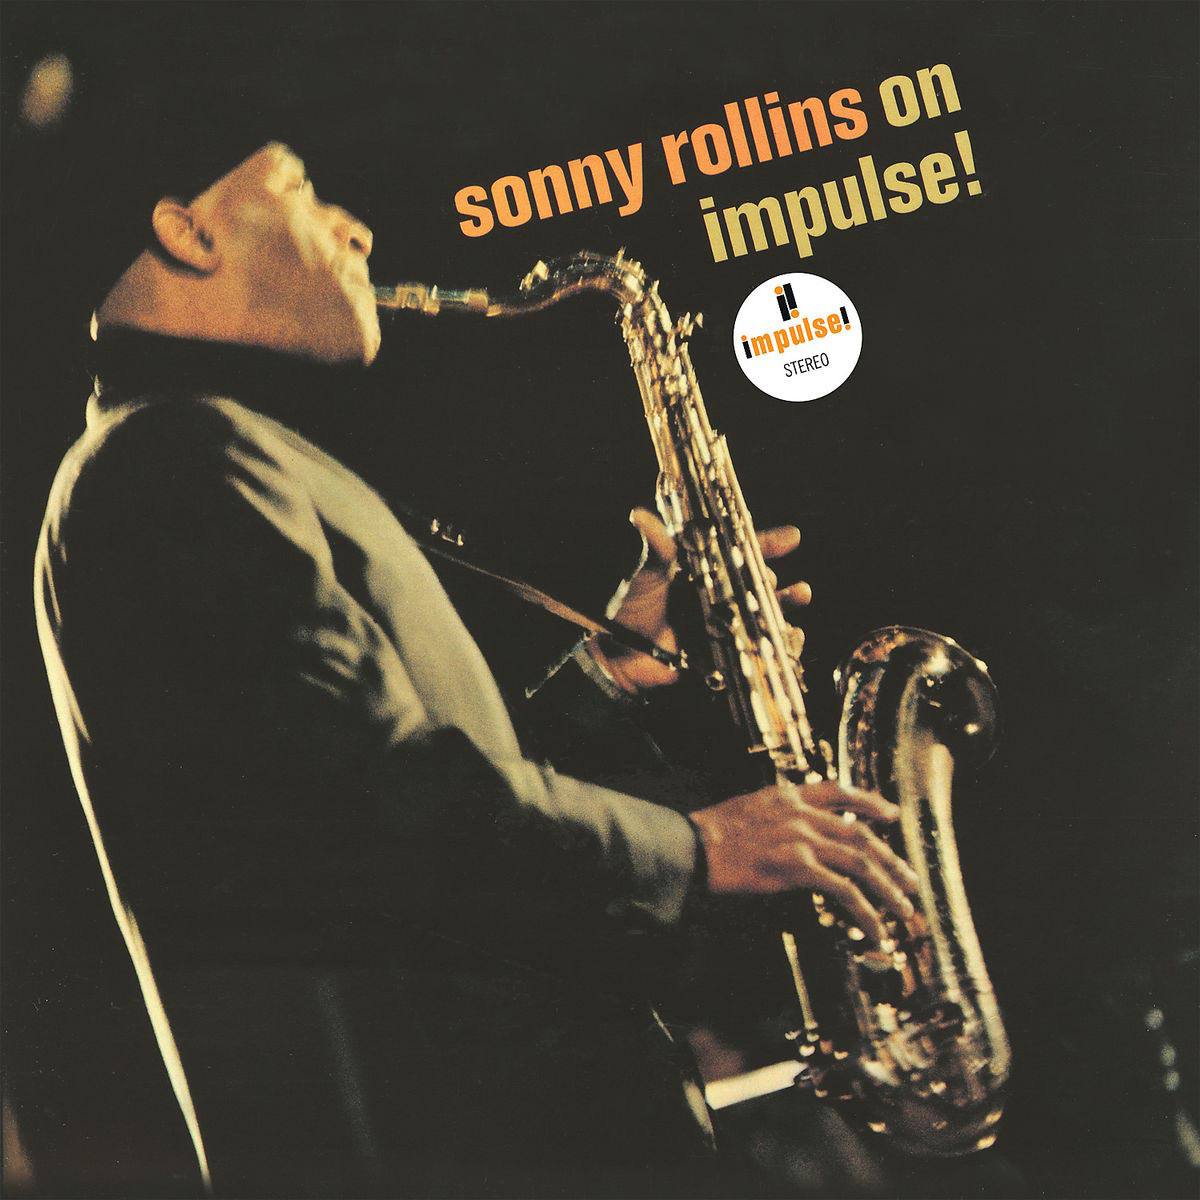 Sonny On Impulse! Rollins - Sounds) - (Vinyl) (Acoustic